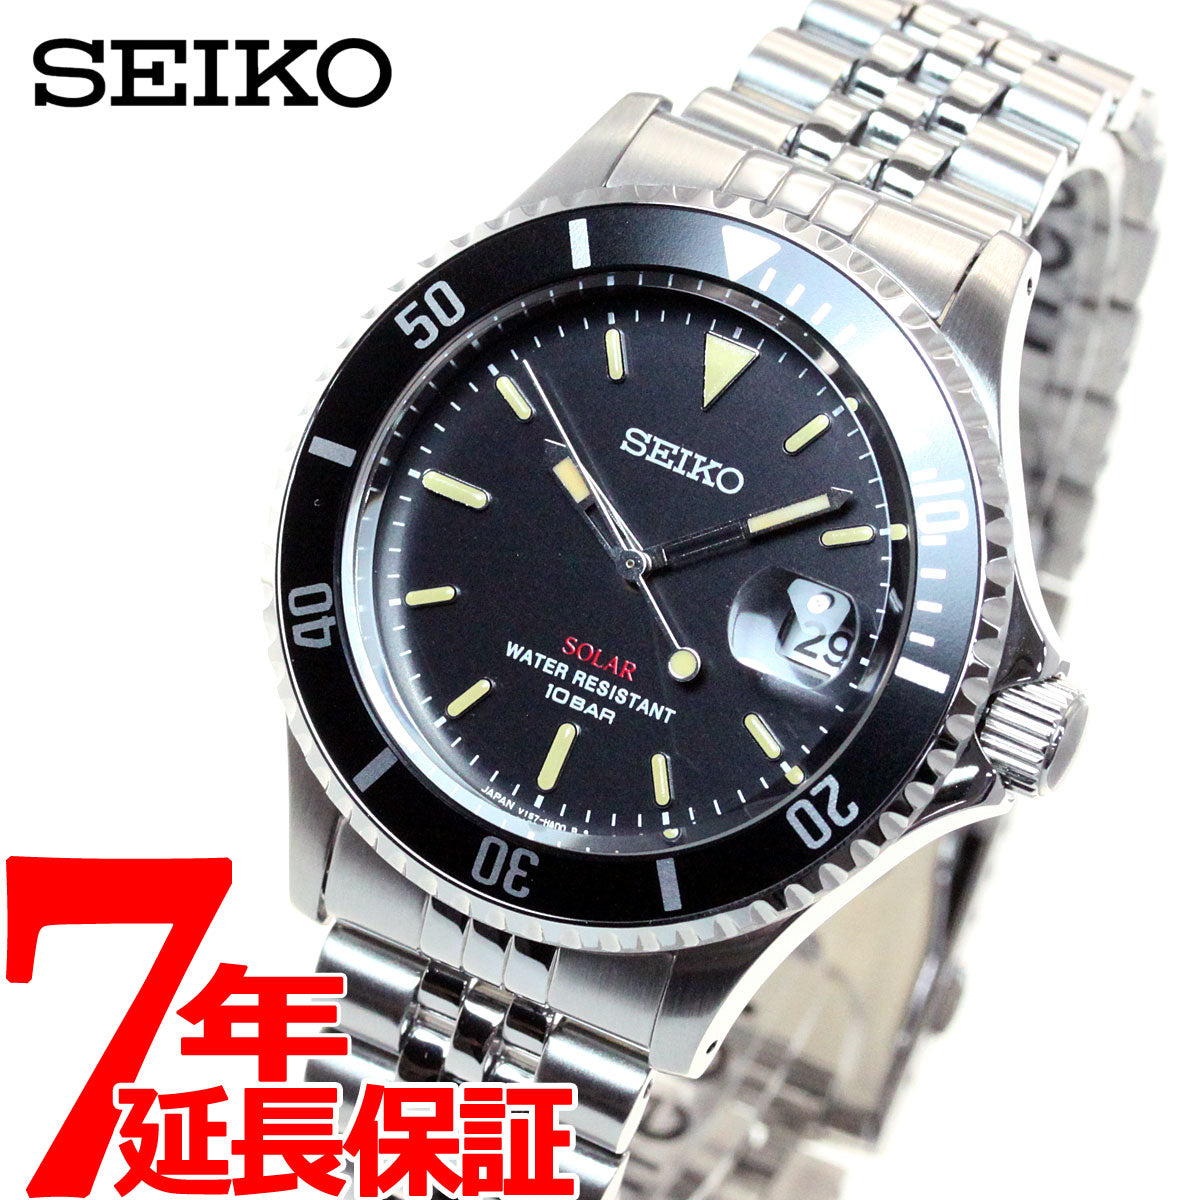 SEIKO 流通限定モデル SZEV012【赤サブ】-